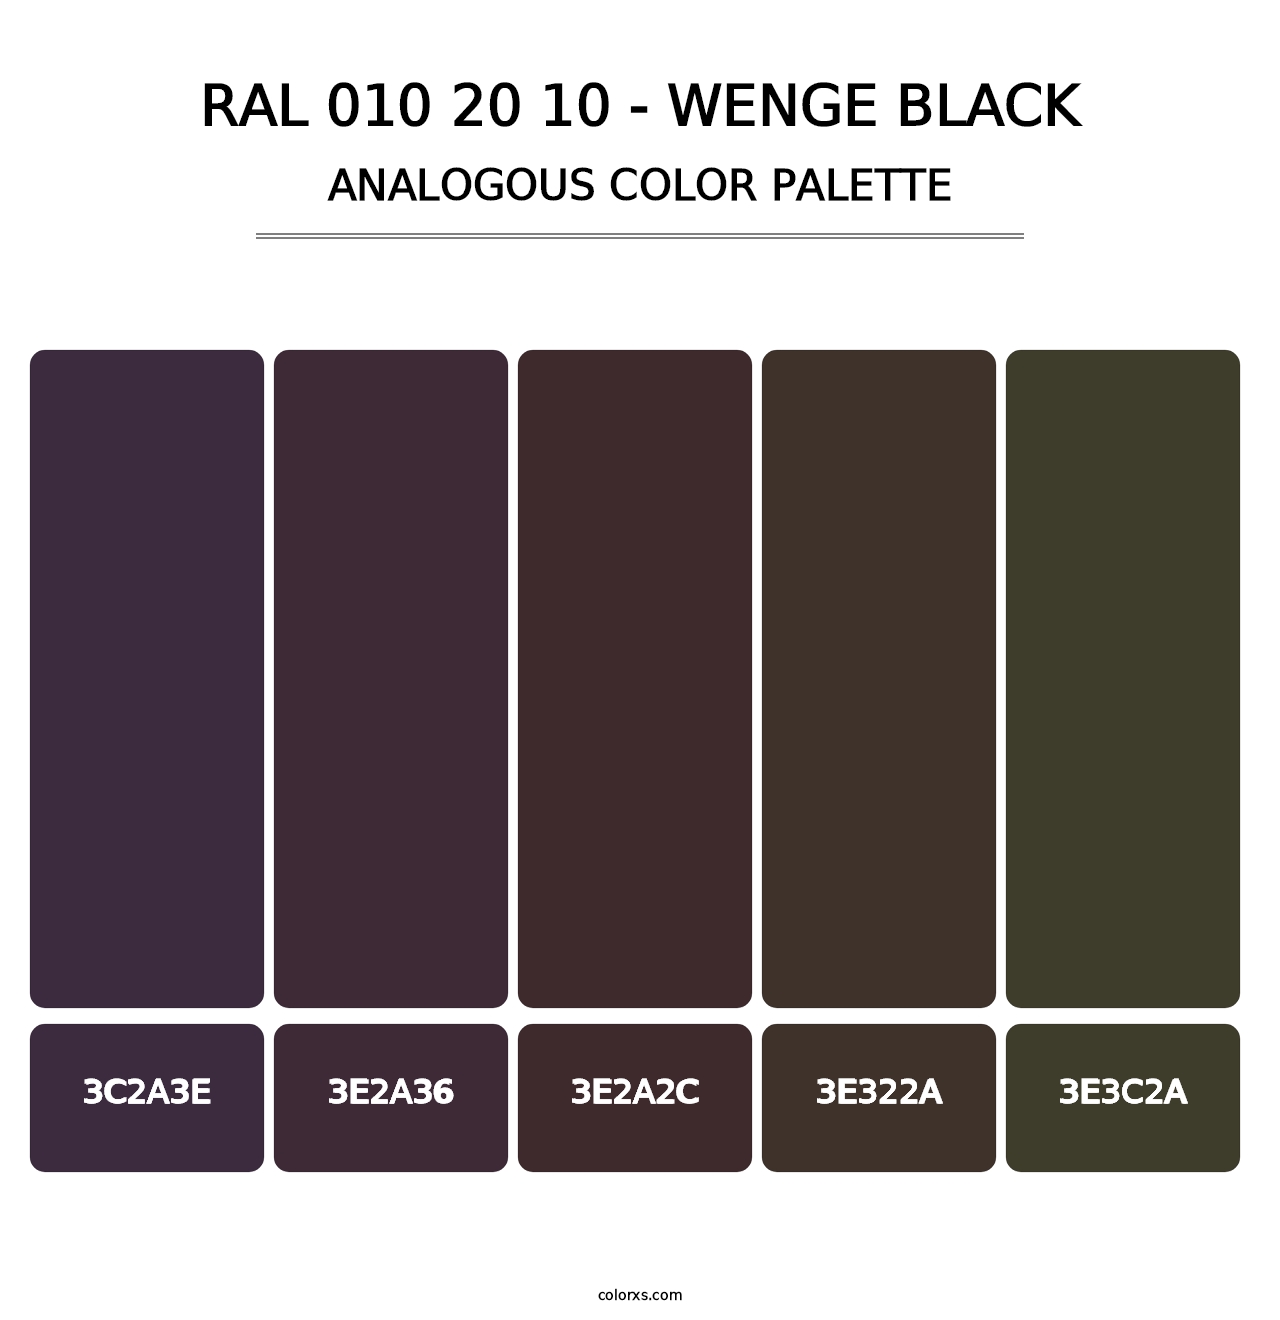 RAL 010 20 10 - Wenge Black - Analogous Color Palette